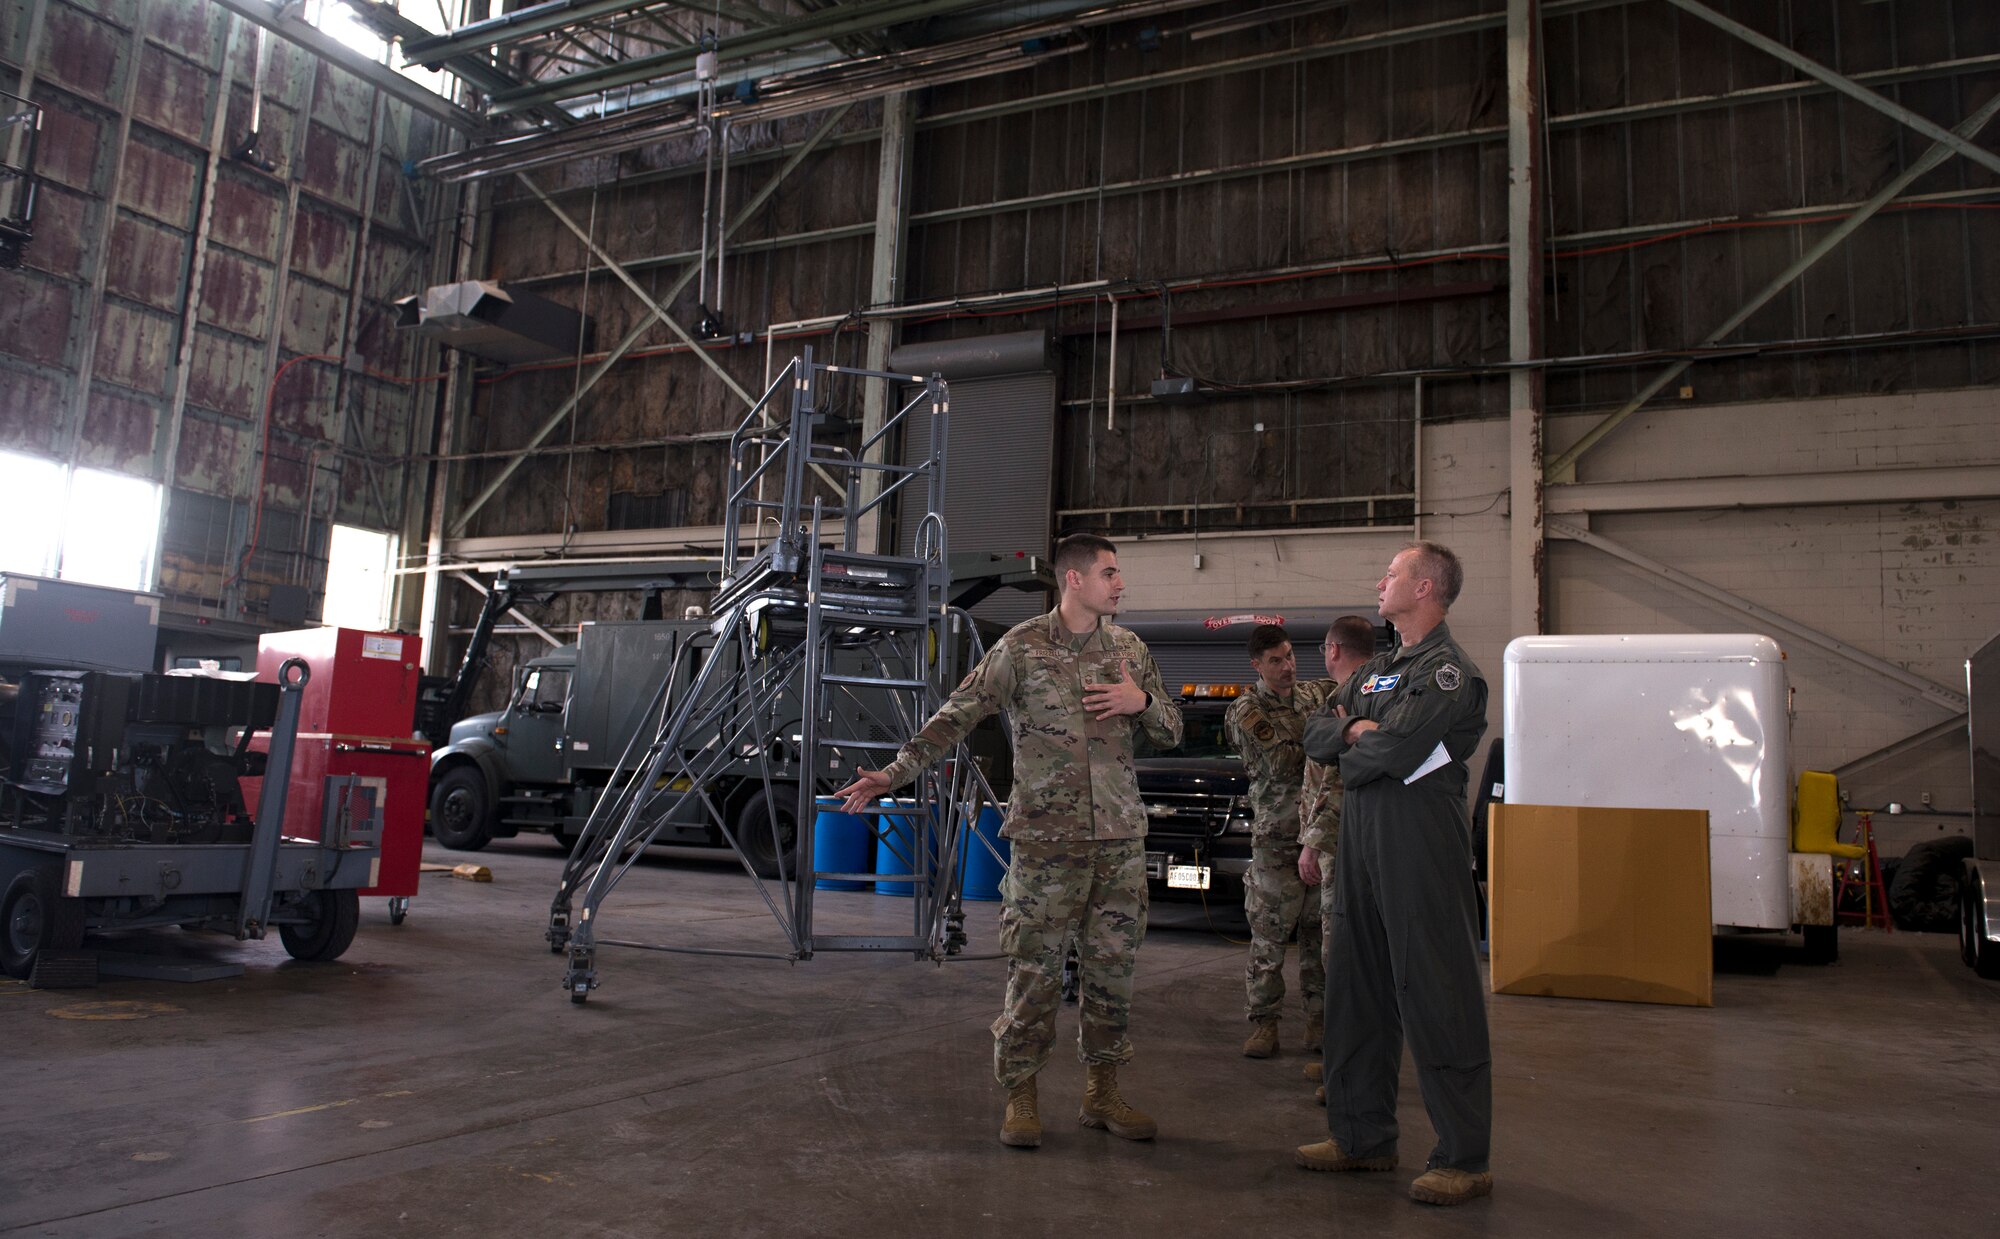 Two men in Air Force uniforms talk in an aircraft hangar.